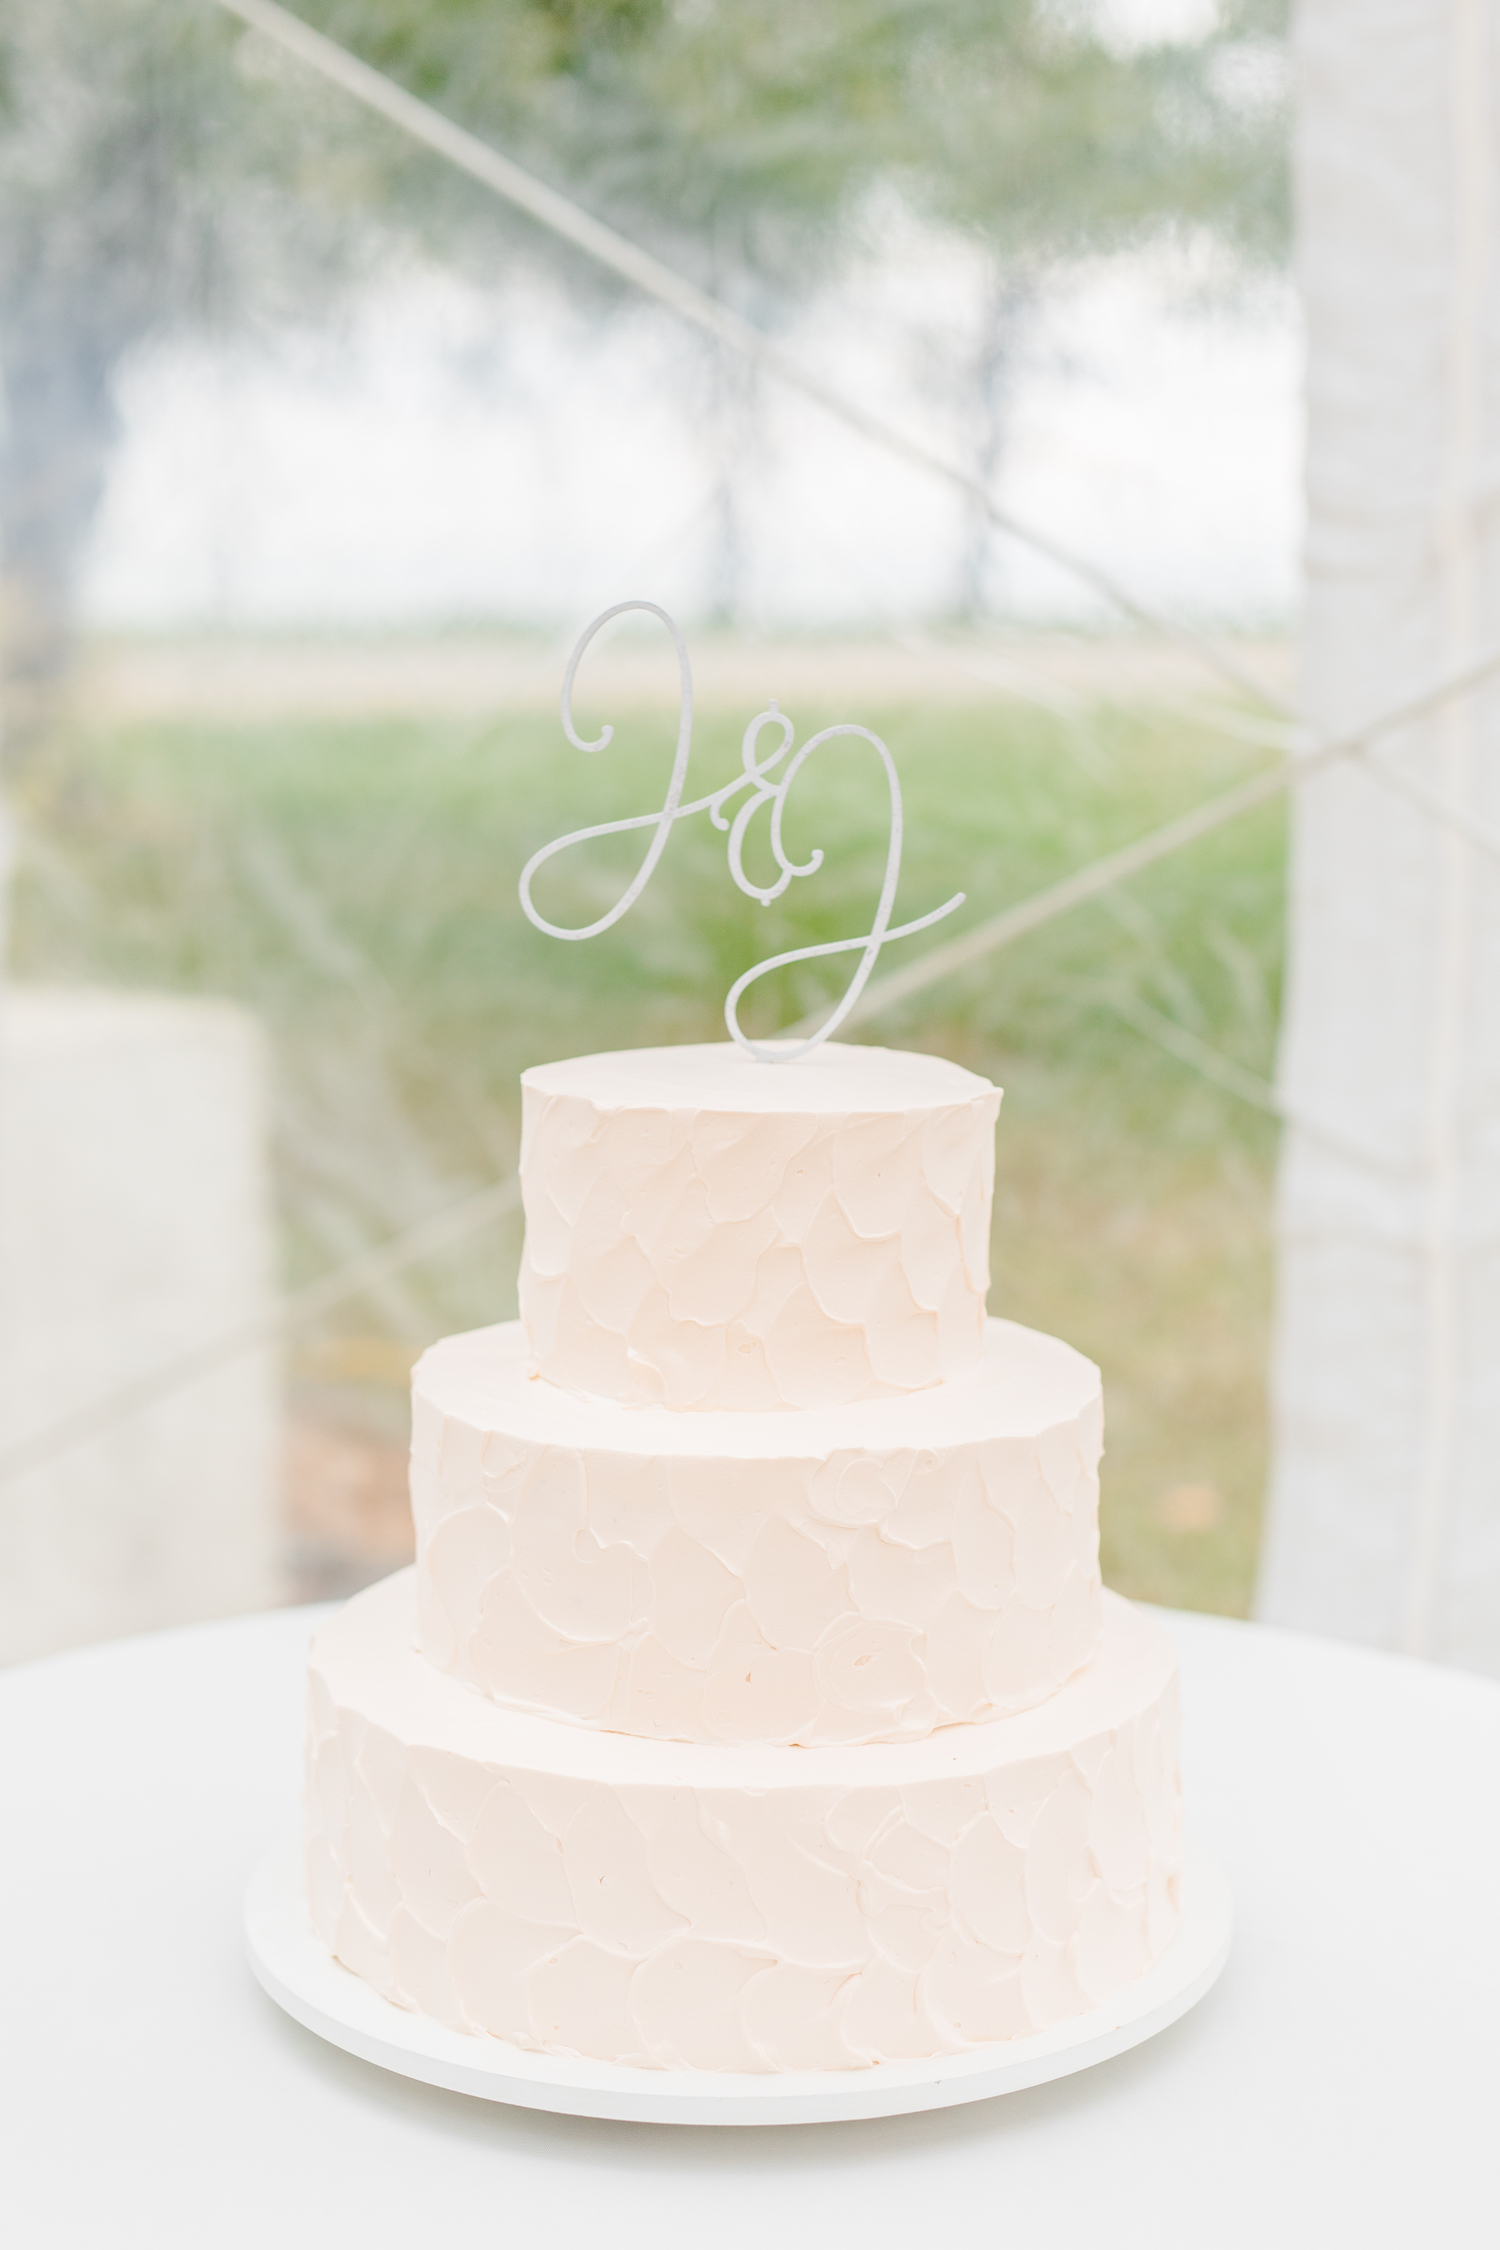 Cake for the Lakehouse wedding